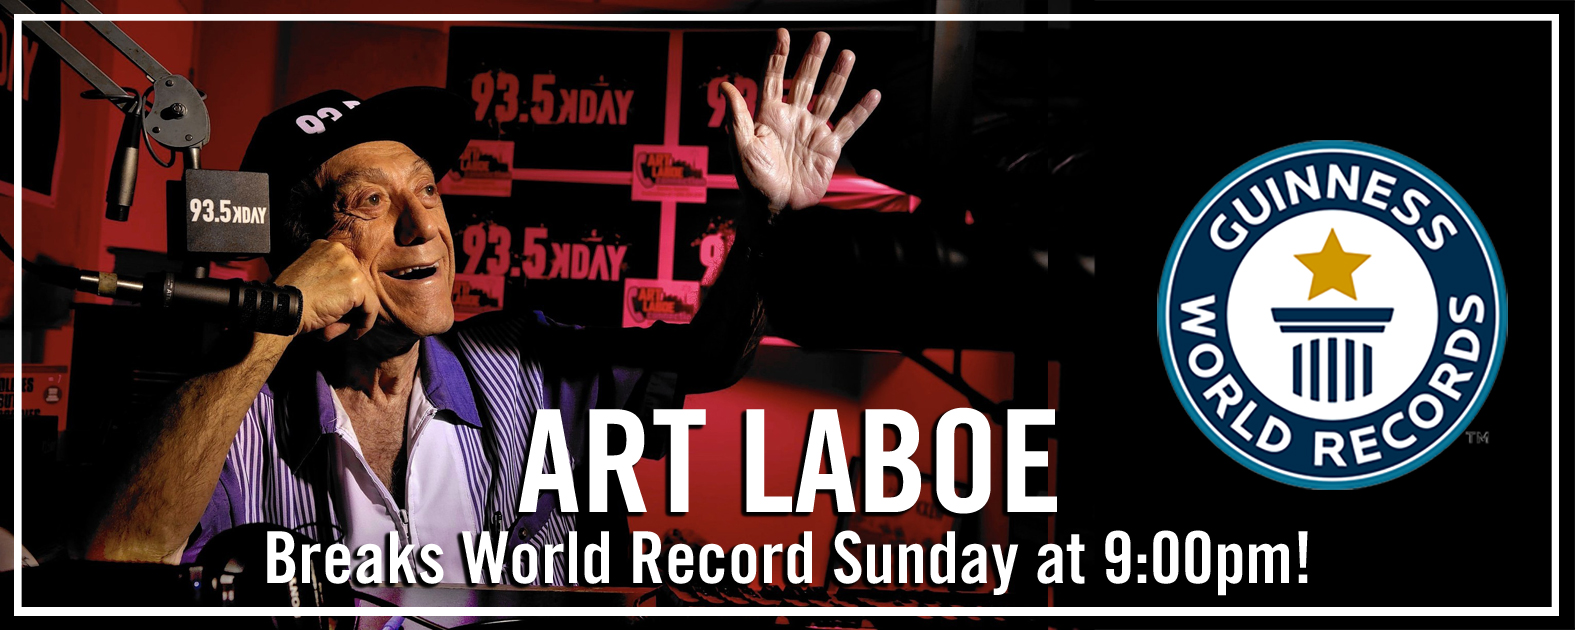 Art Laboe Breaks World Record KDAYFM